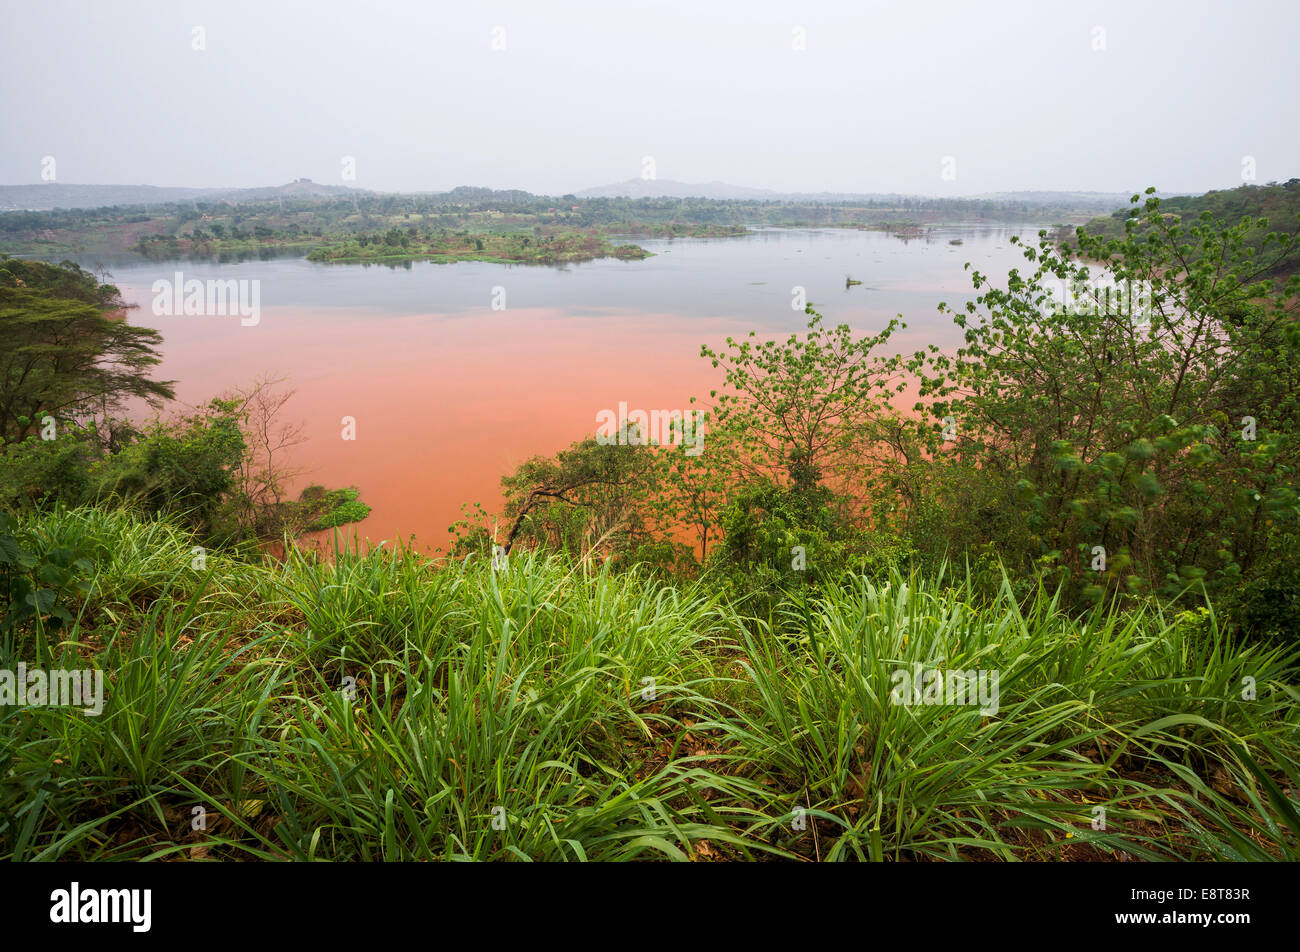 River White Nile turns red after heavy rainfalls in rainy season, Jinja, Uganda Stock Photo